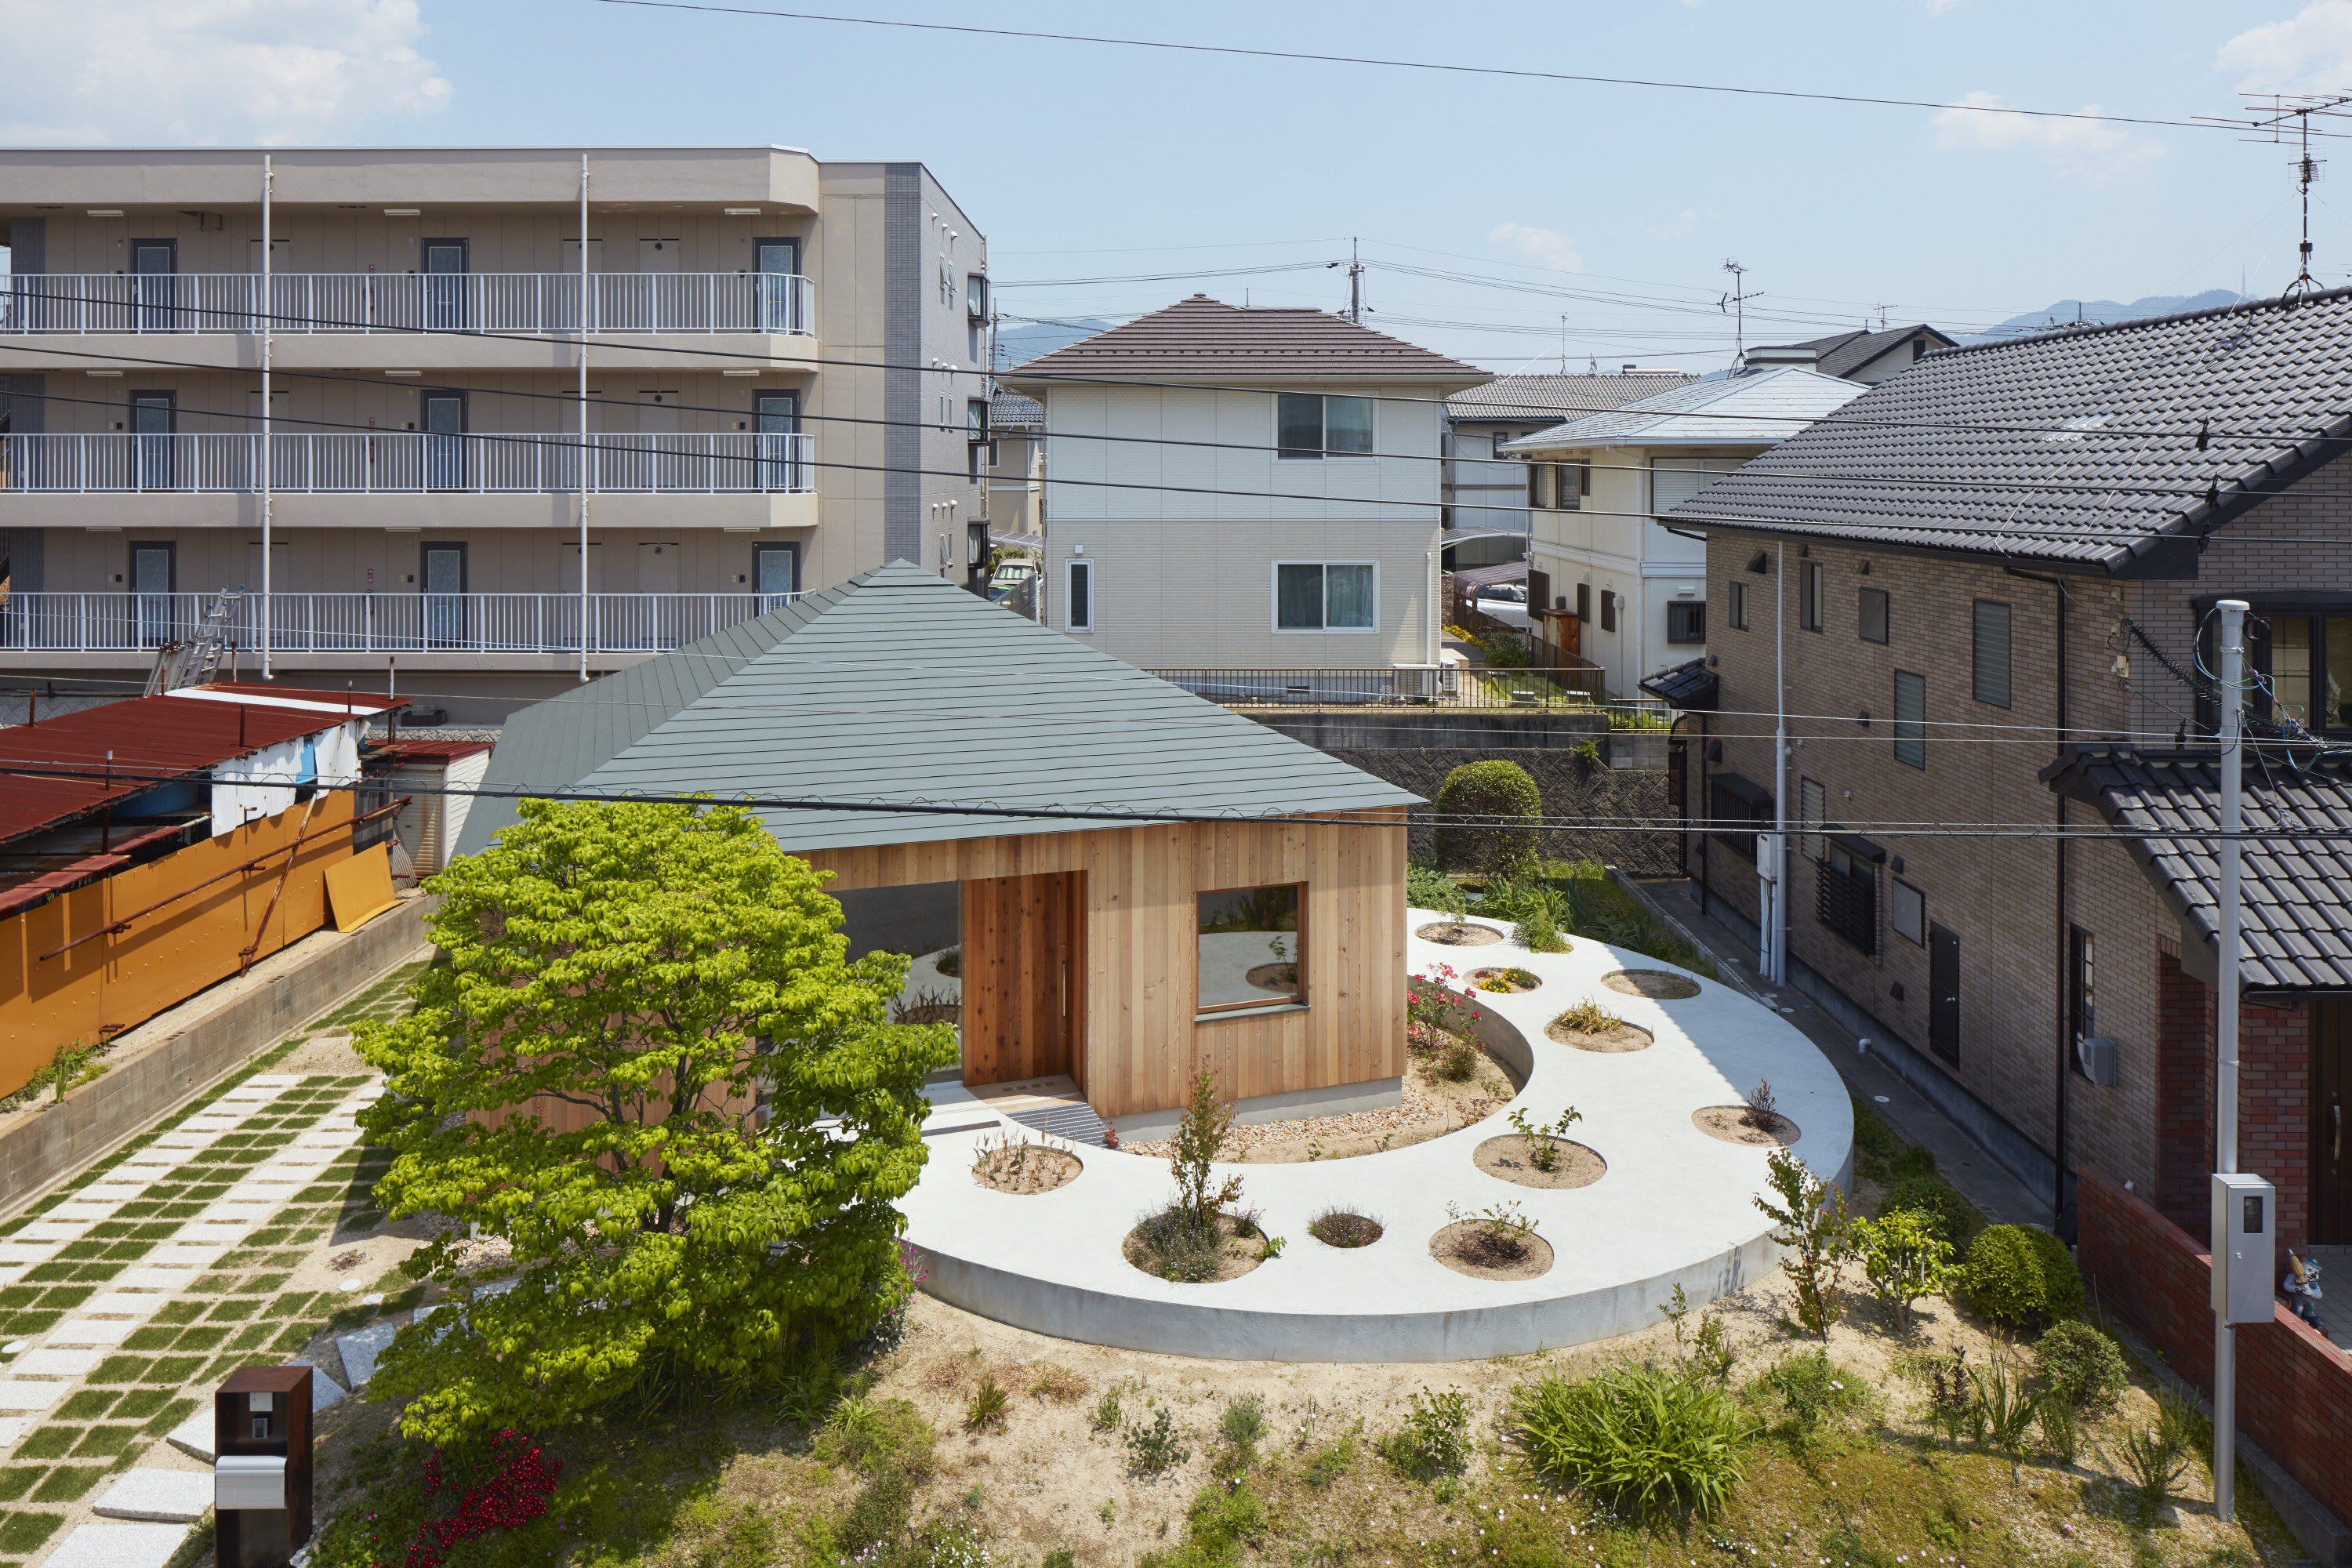 House in Mukainada by FujiwaraMuro Architects